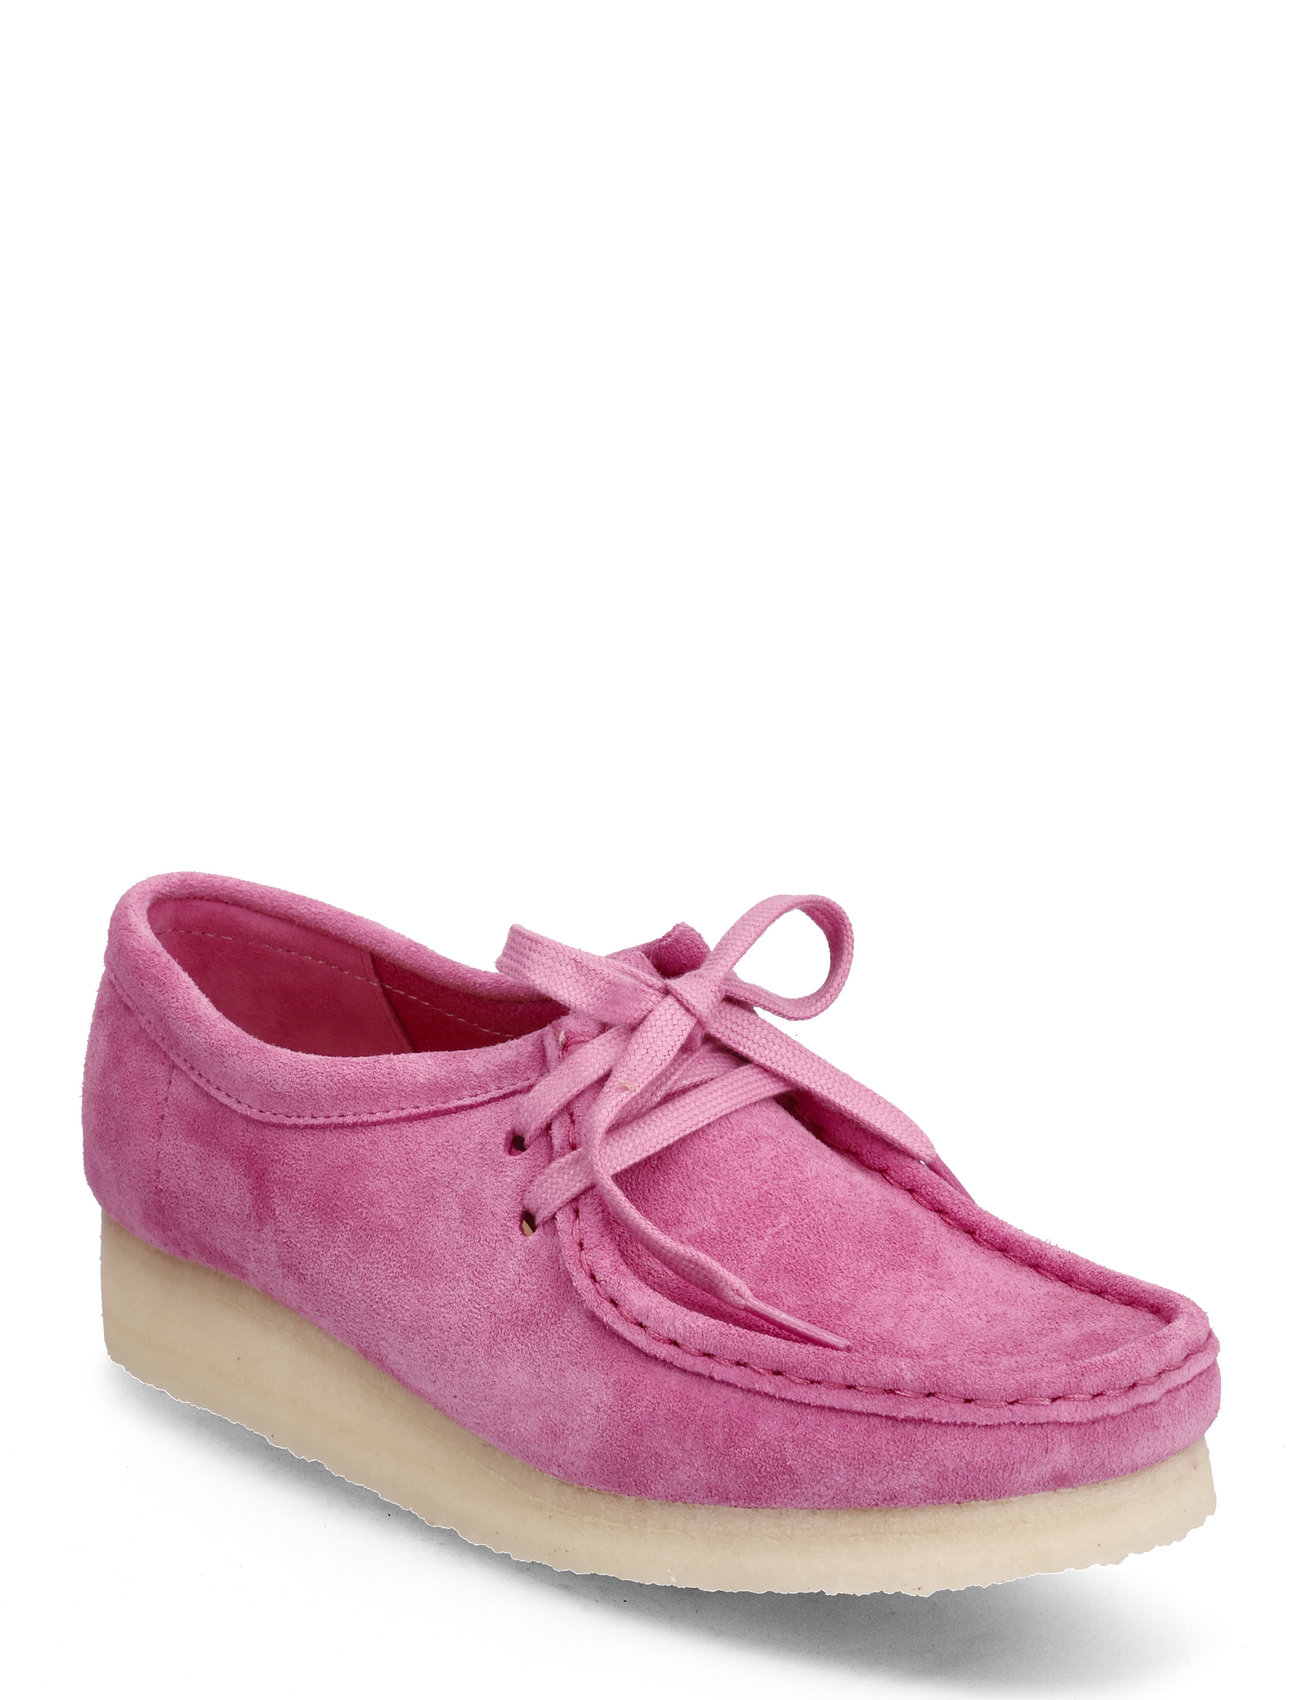 Clarks Originals Wallabee. Pink Suede - Laced shoes - Boozt.com